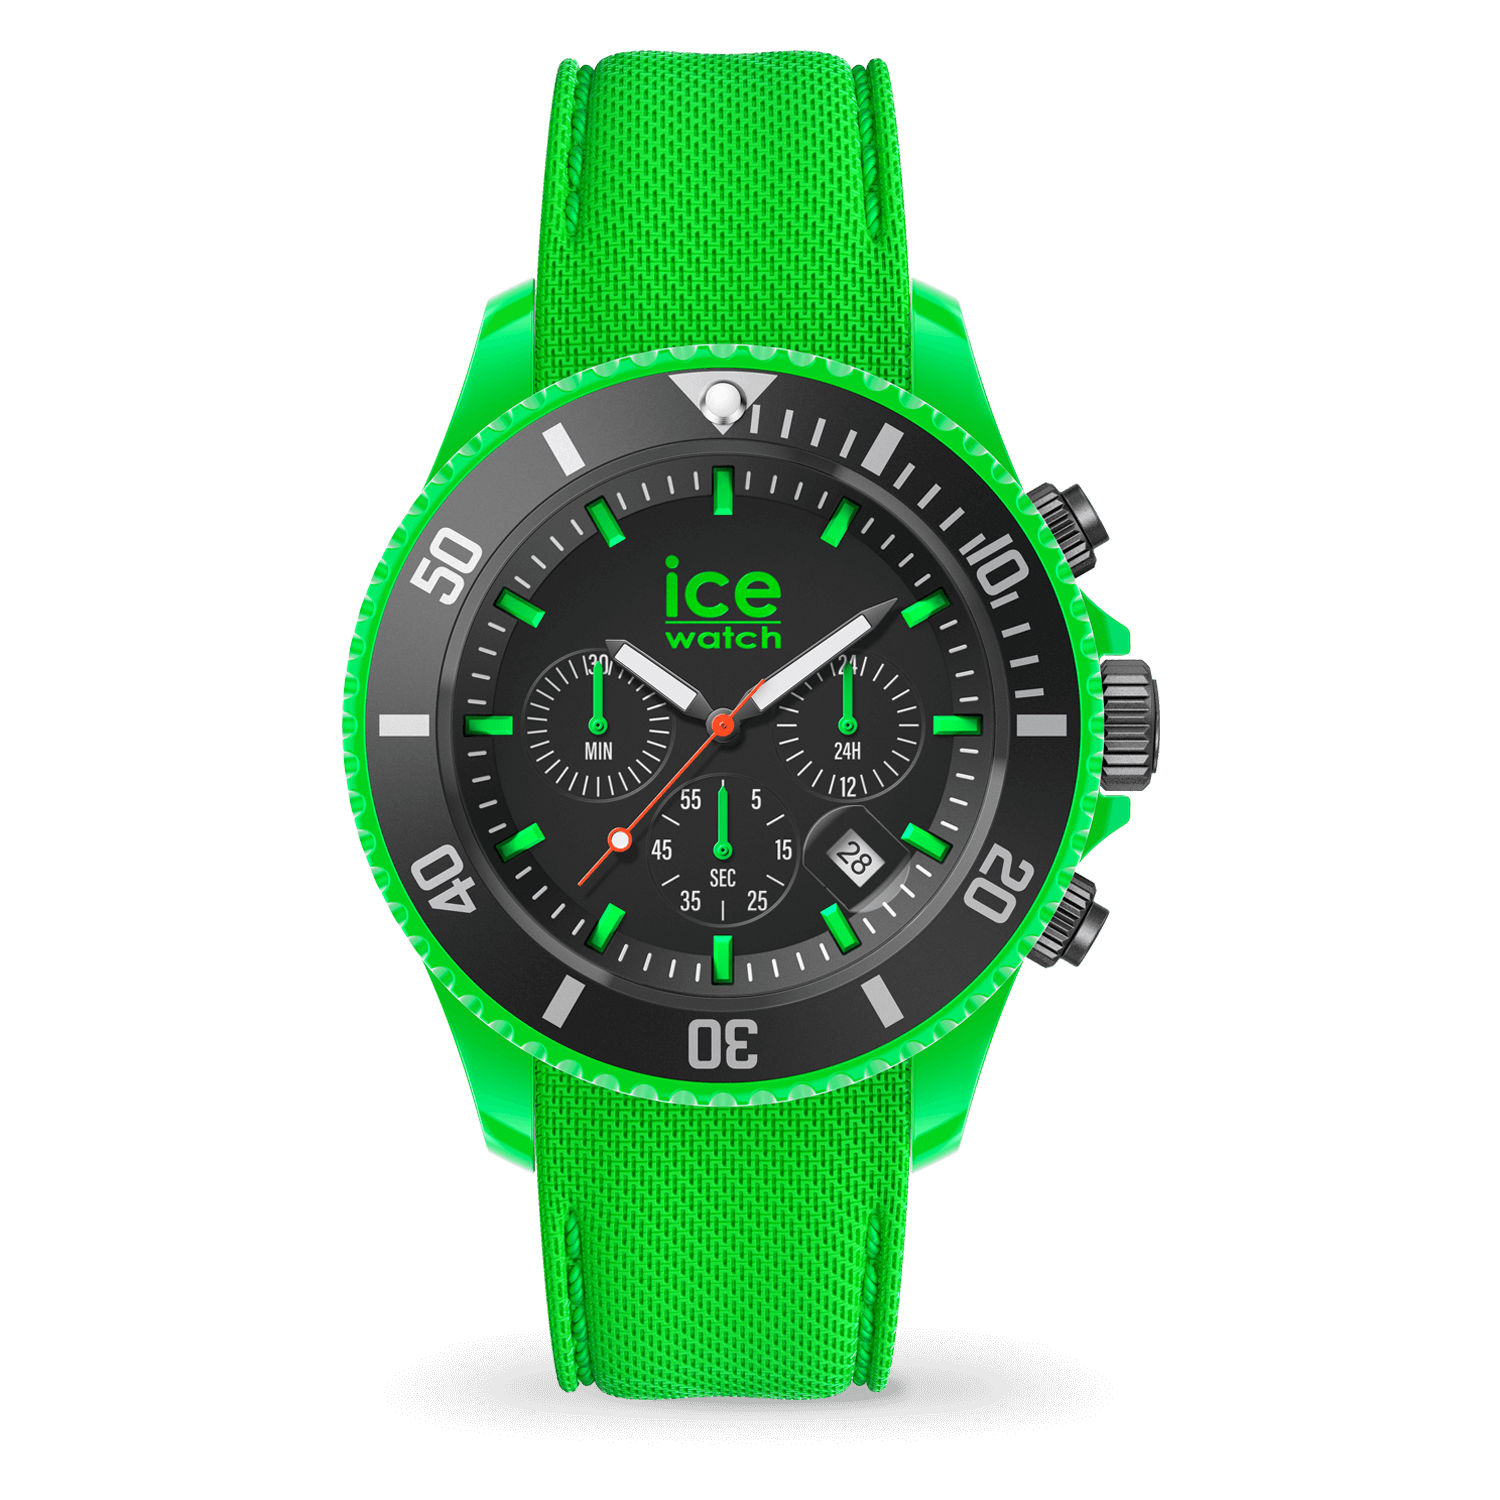 Часы Ice. Часы Ice watch. Зеленые часы Ice. Ice watch черные.